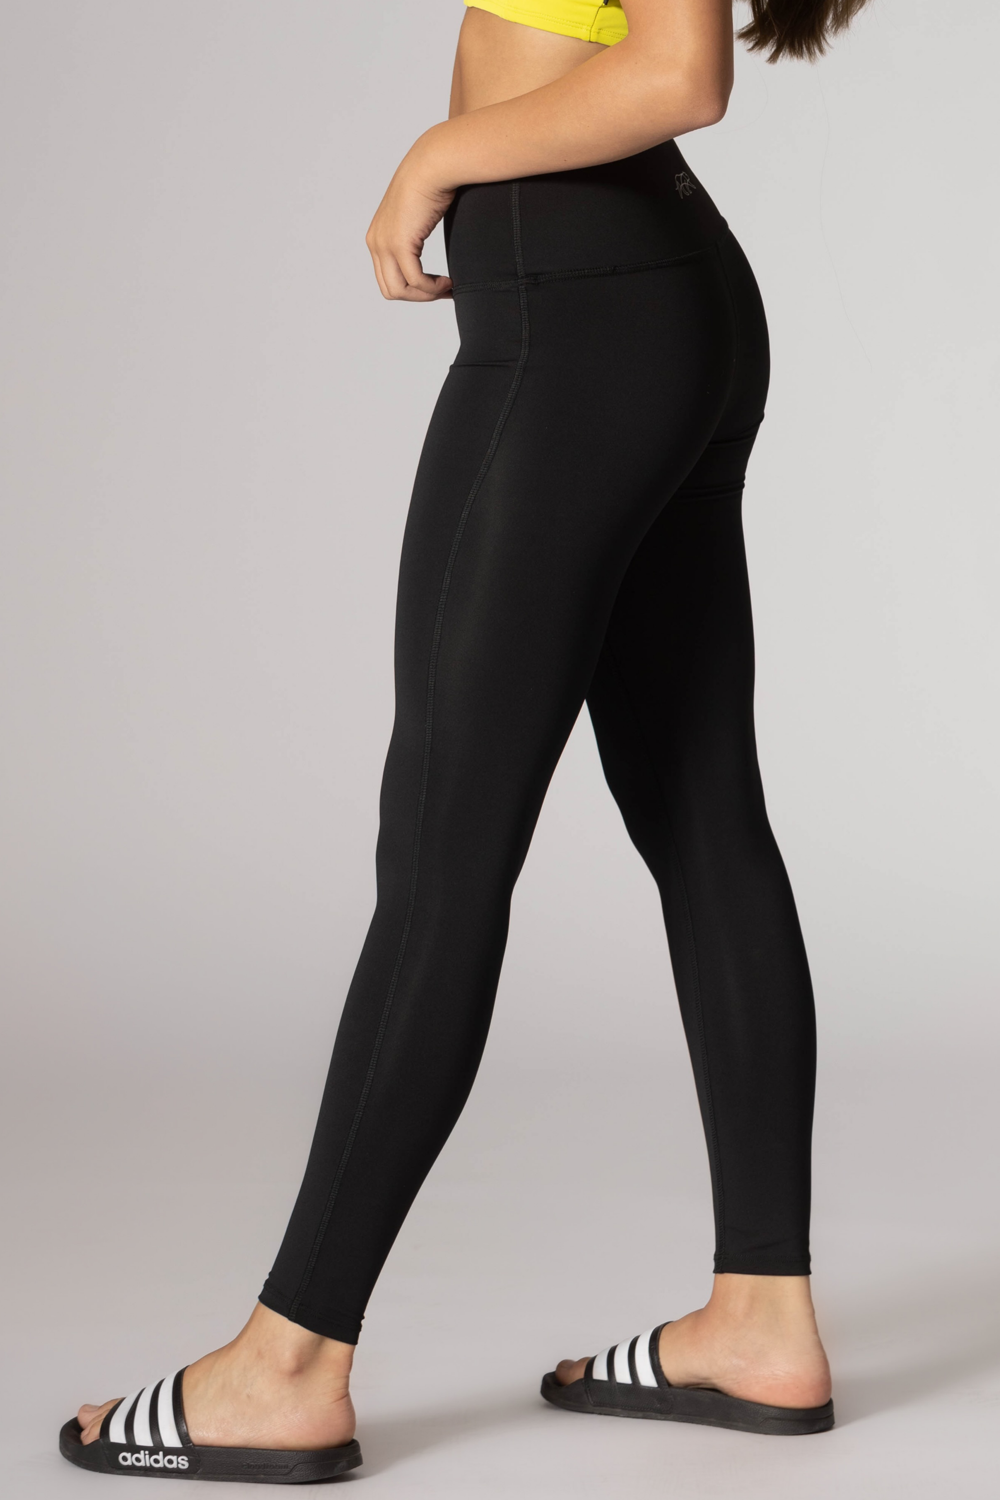 Anti Cellulite Sport Leggings | Scrunch Butt Workout Leggings - Yoga Gym  Fitness - Aliexpress